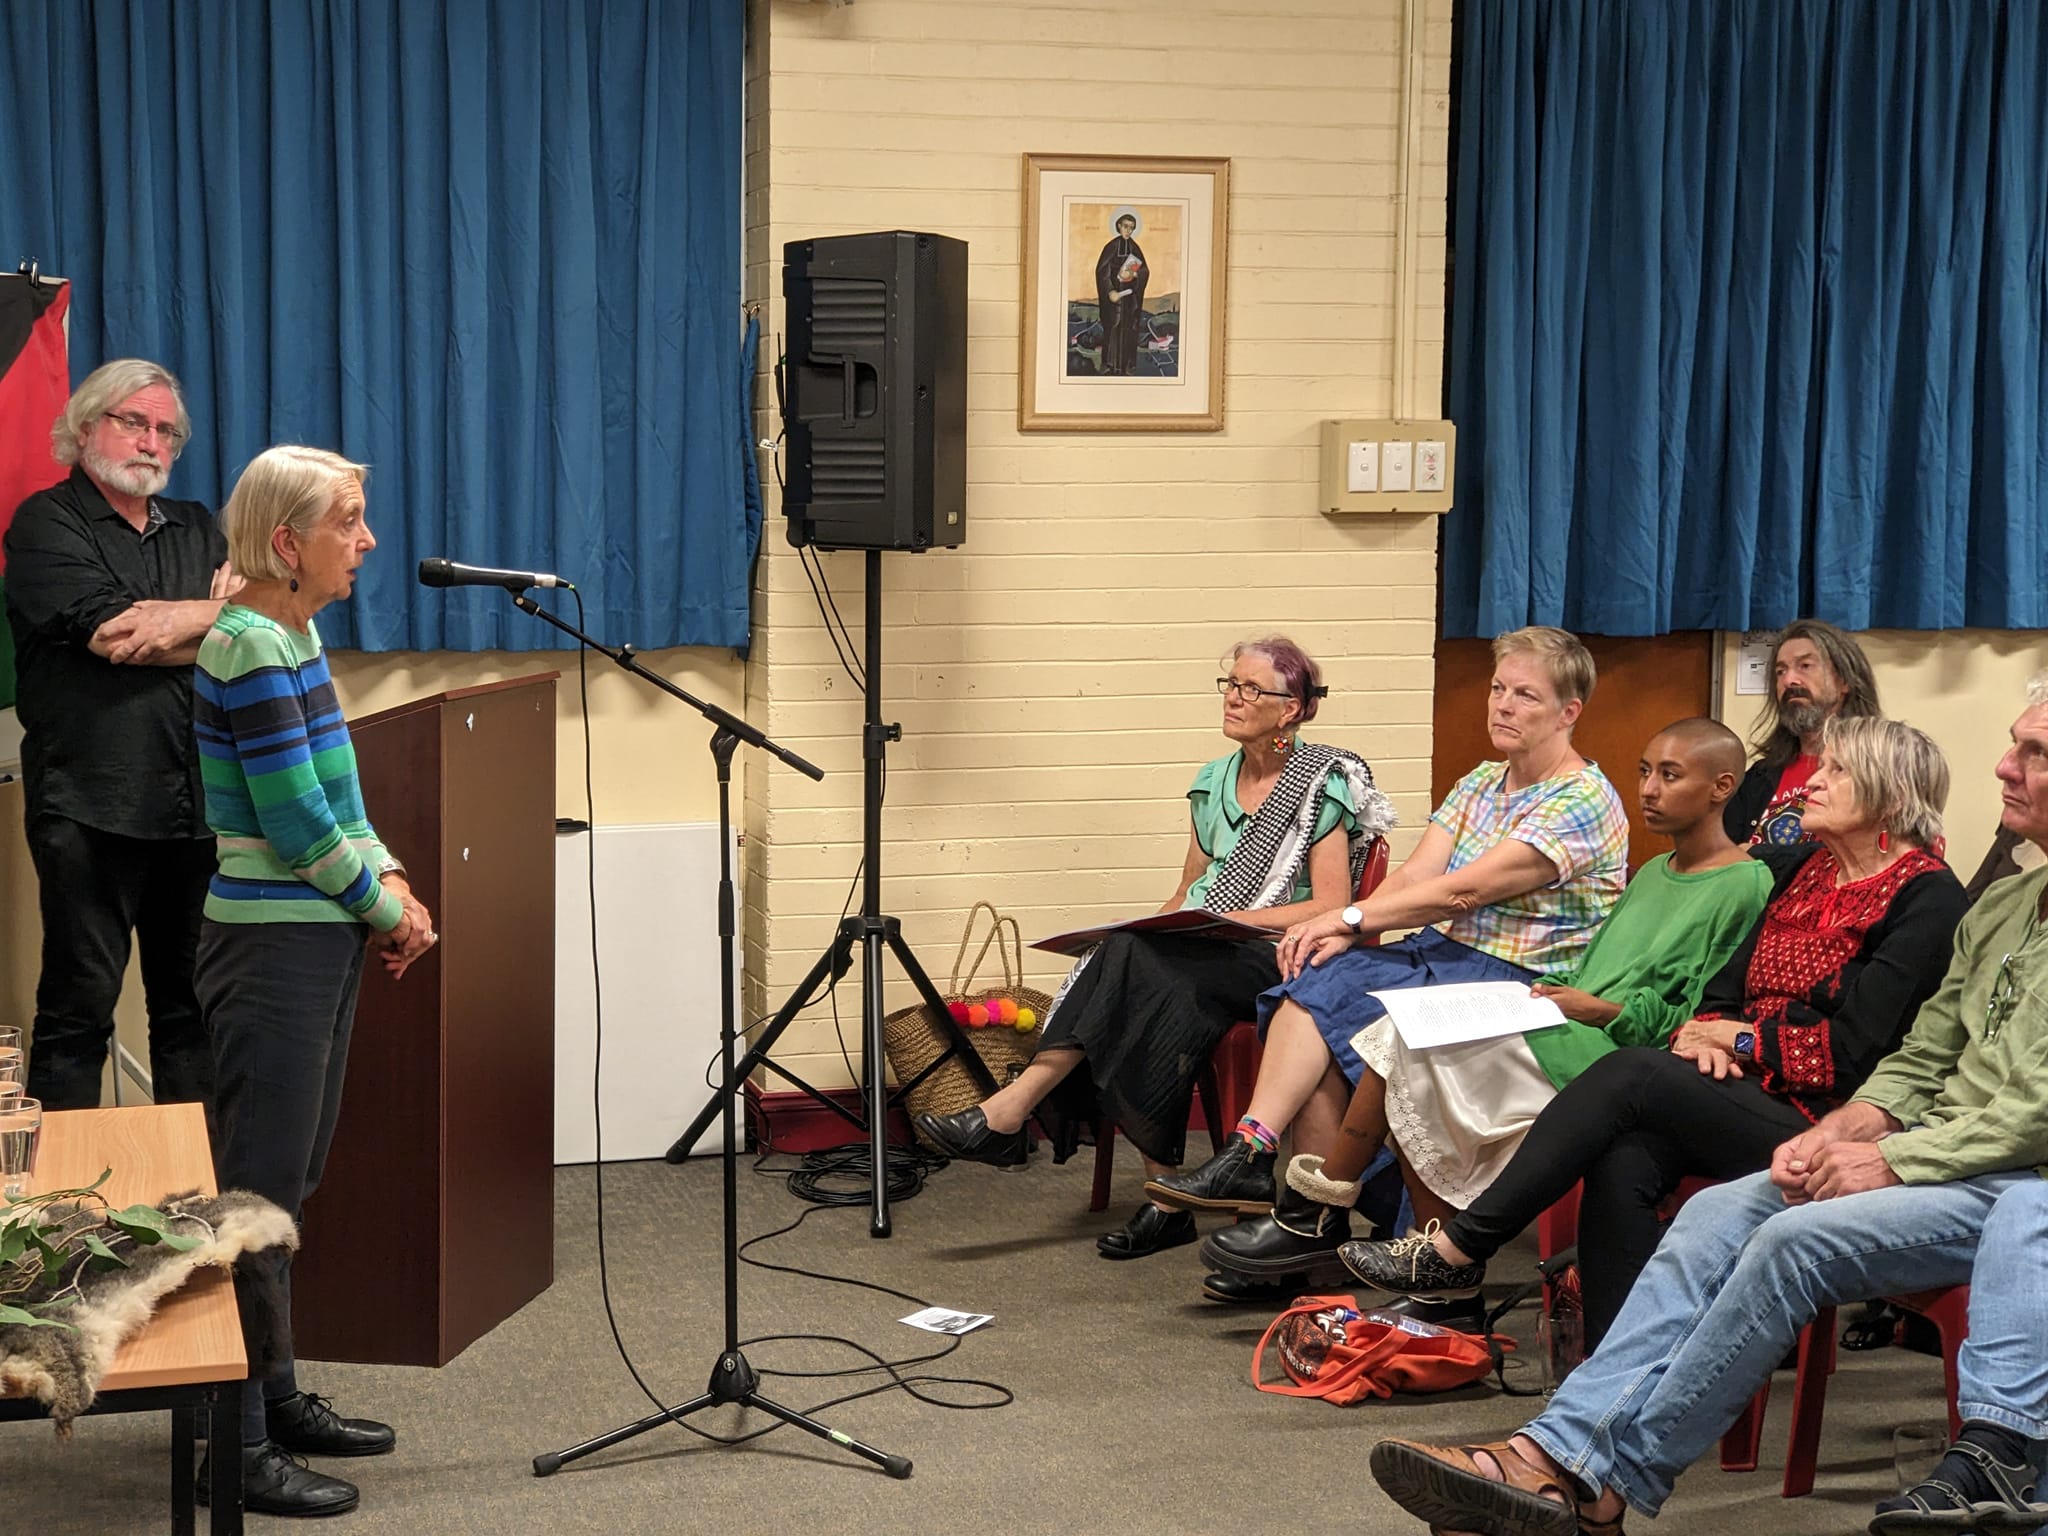 Former Greens senator Lee Rhiannon introduces "Palestine Under Siege", Meanjin/Brisbane, April 10